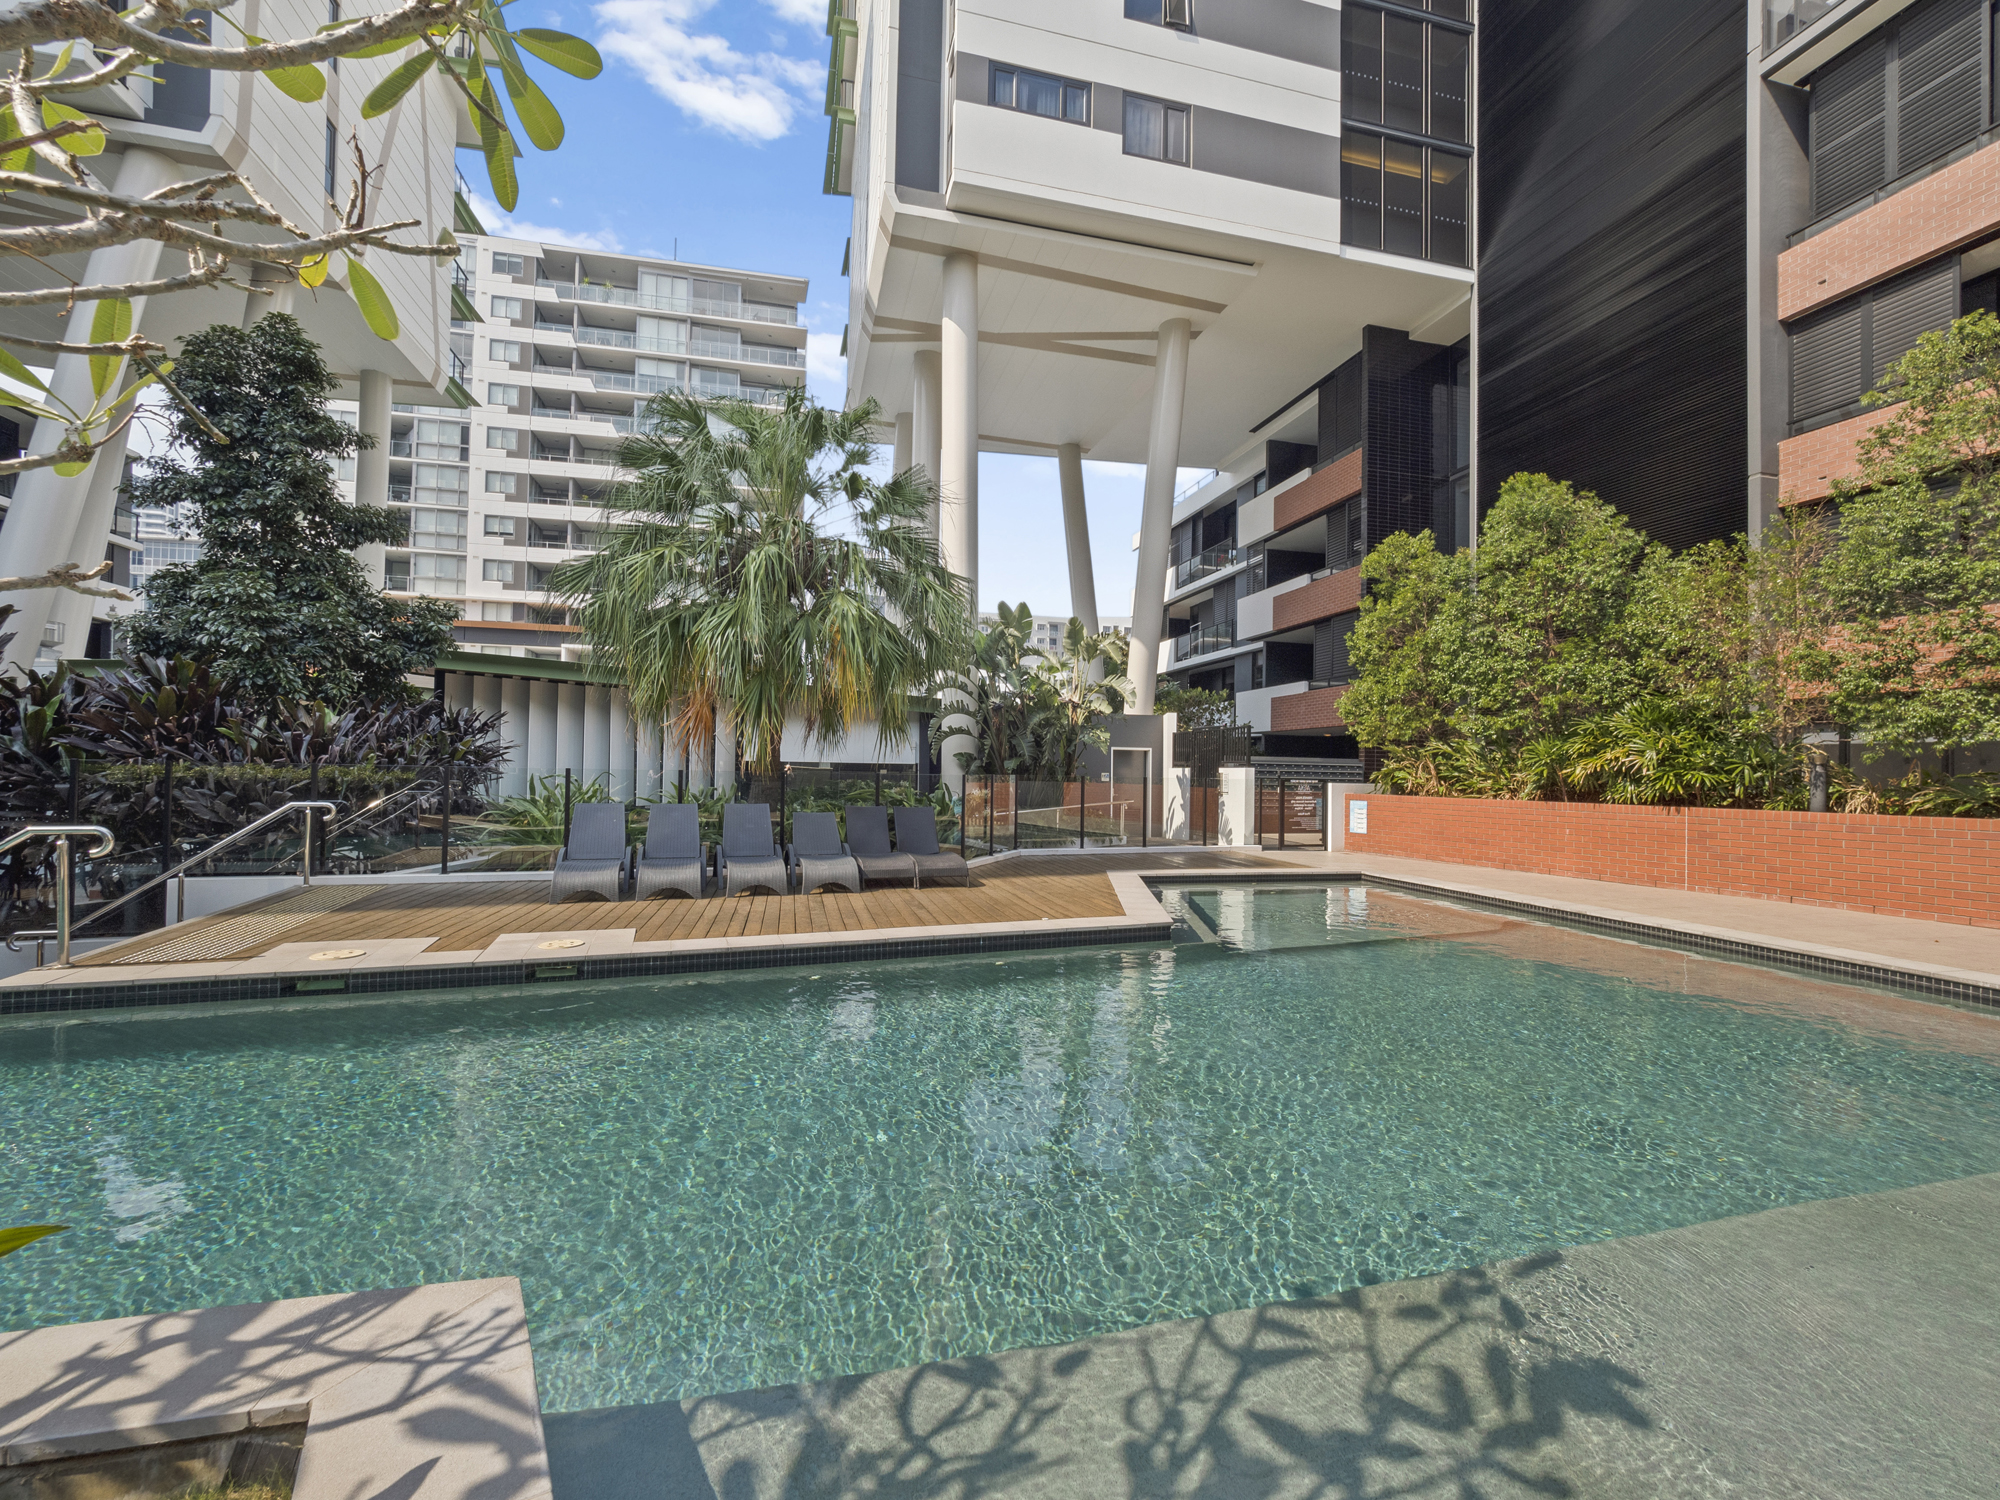 The pool area - 9 Edmonstone St South Brisbane apartment photography